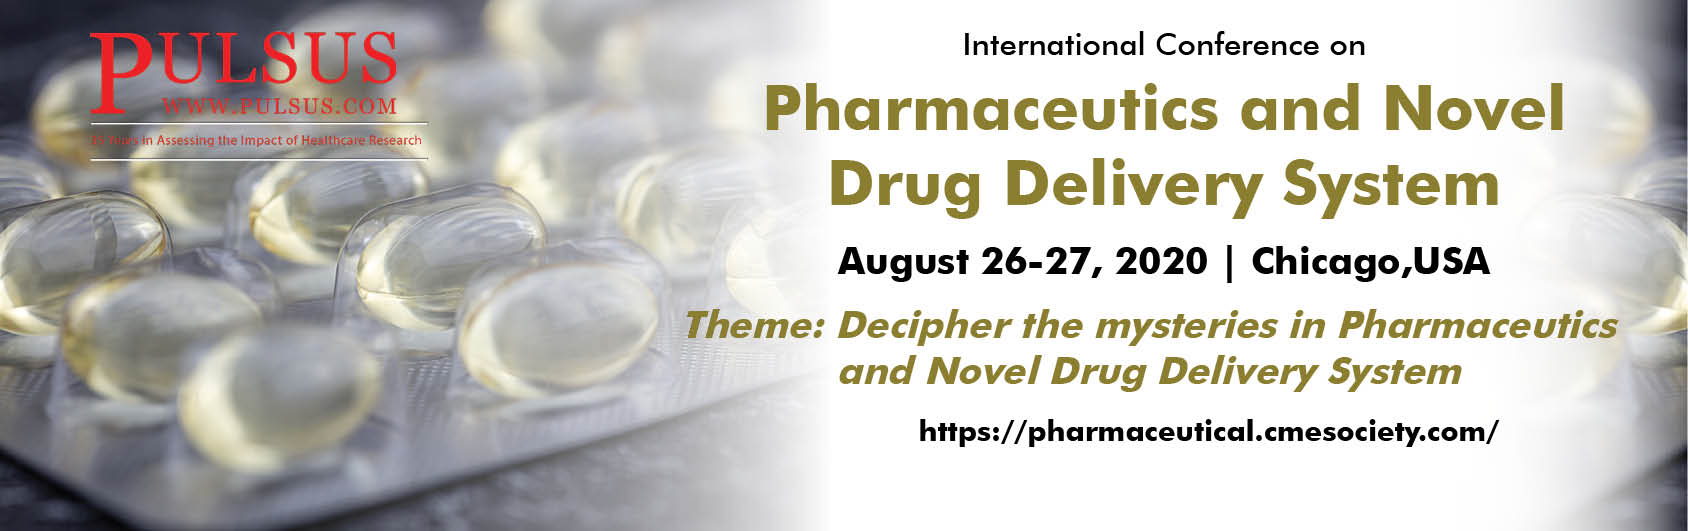 International Conference on Pharmaceutics and Novel Drug Delivery System, Chicago, Illinois, United States